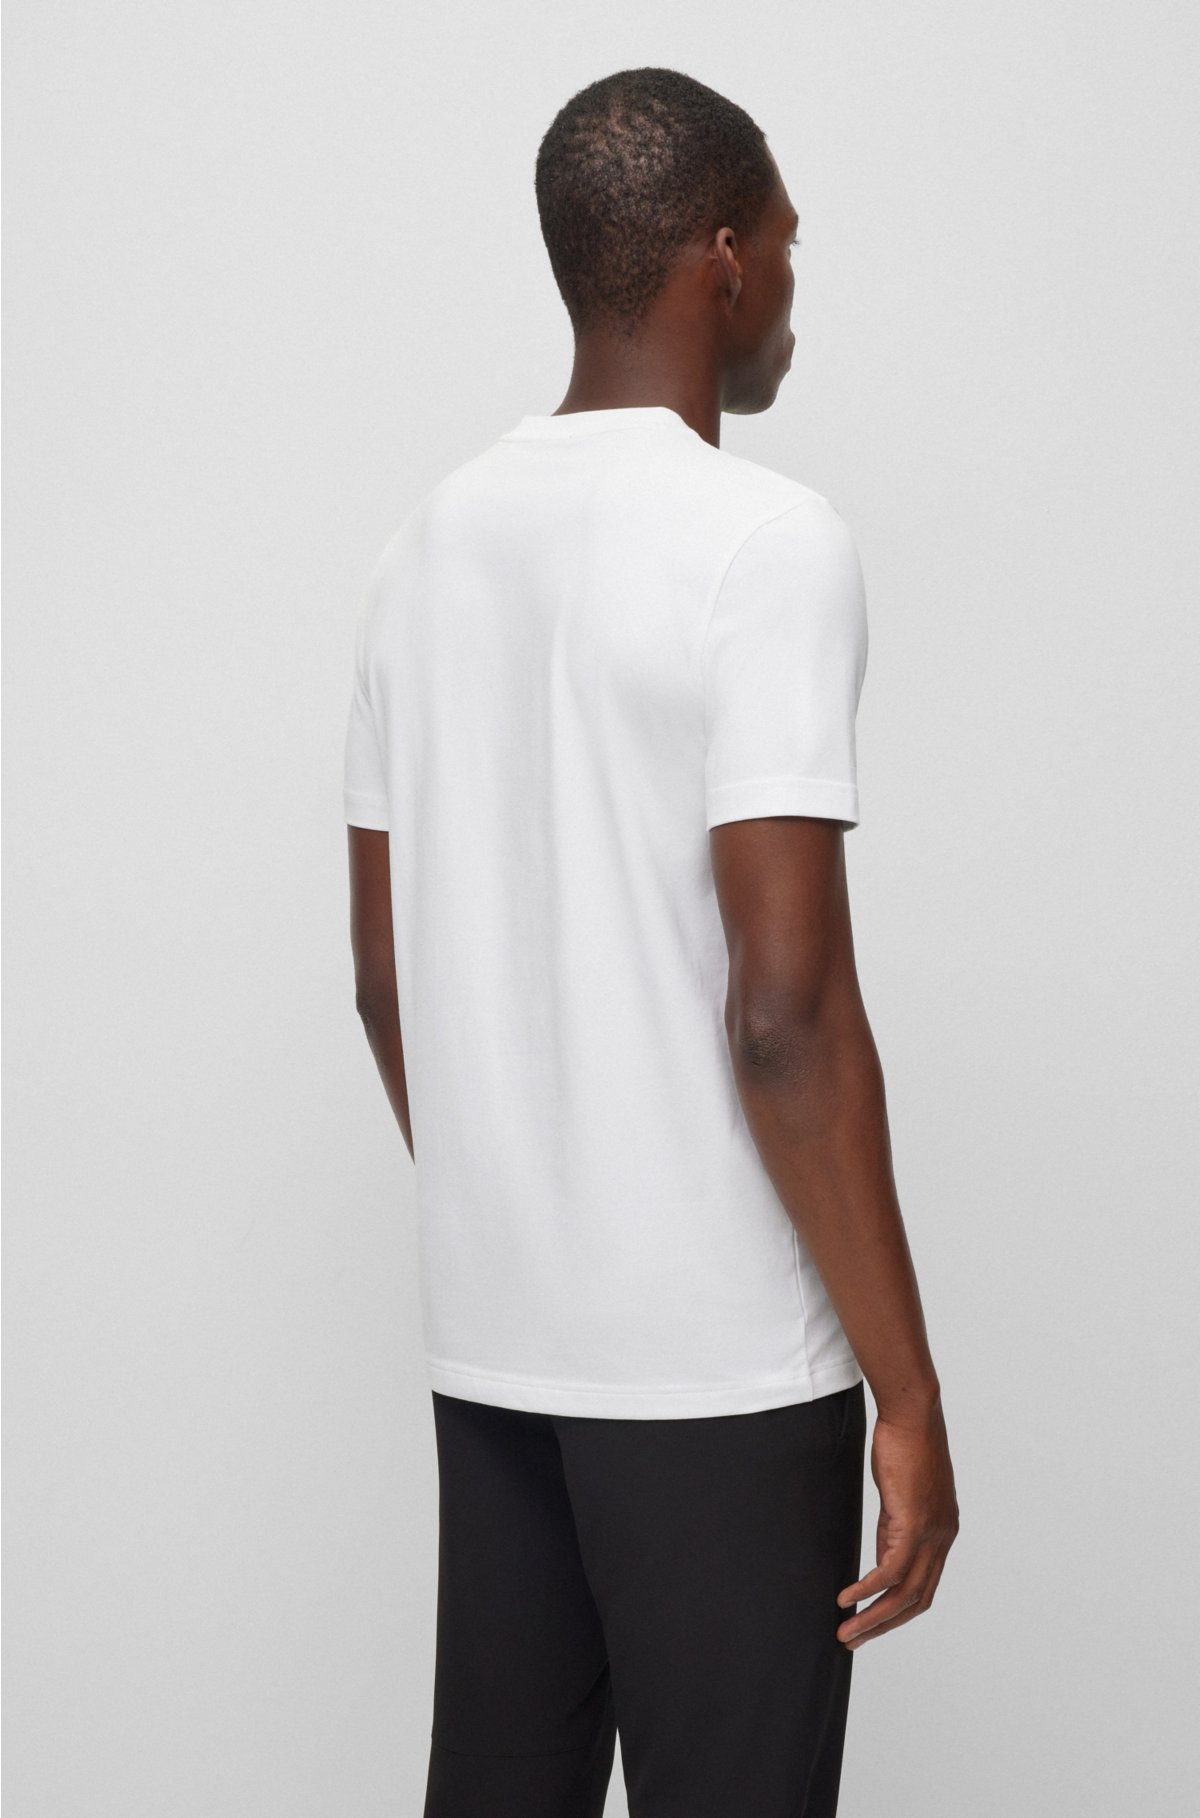 MOM T-shirt maker of Humans Tagline Print Saying V-neck Stretch Cotton  Jersey Short Sleeve Tee 